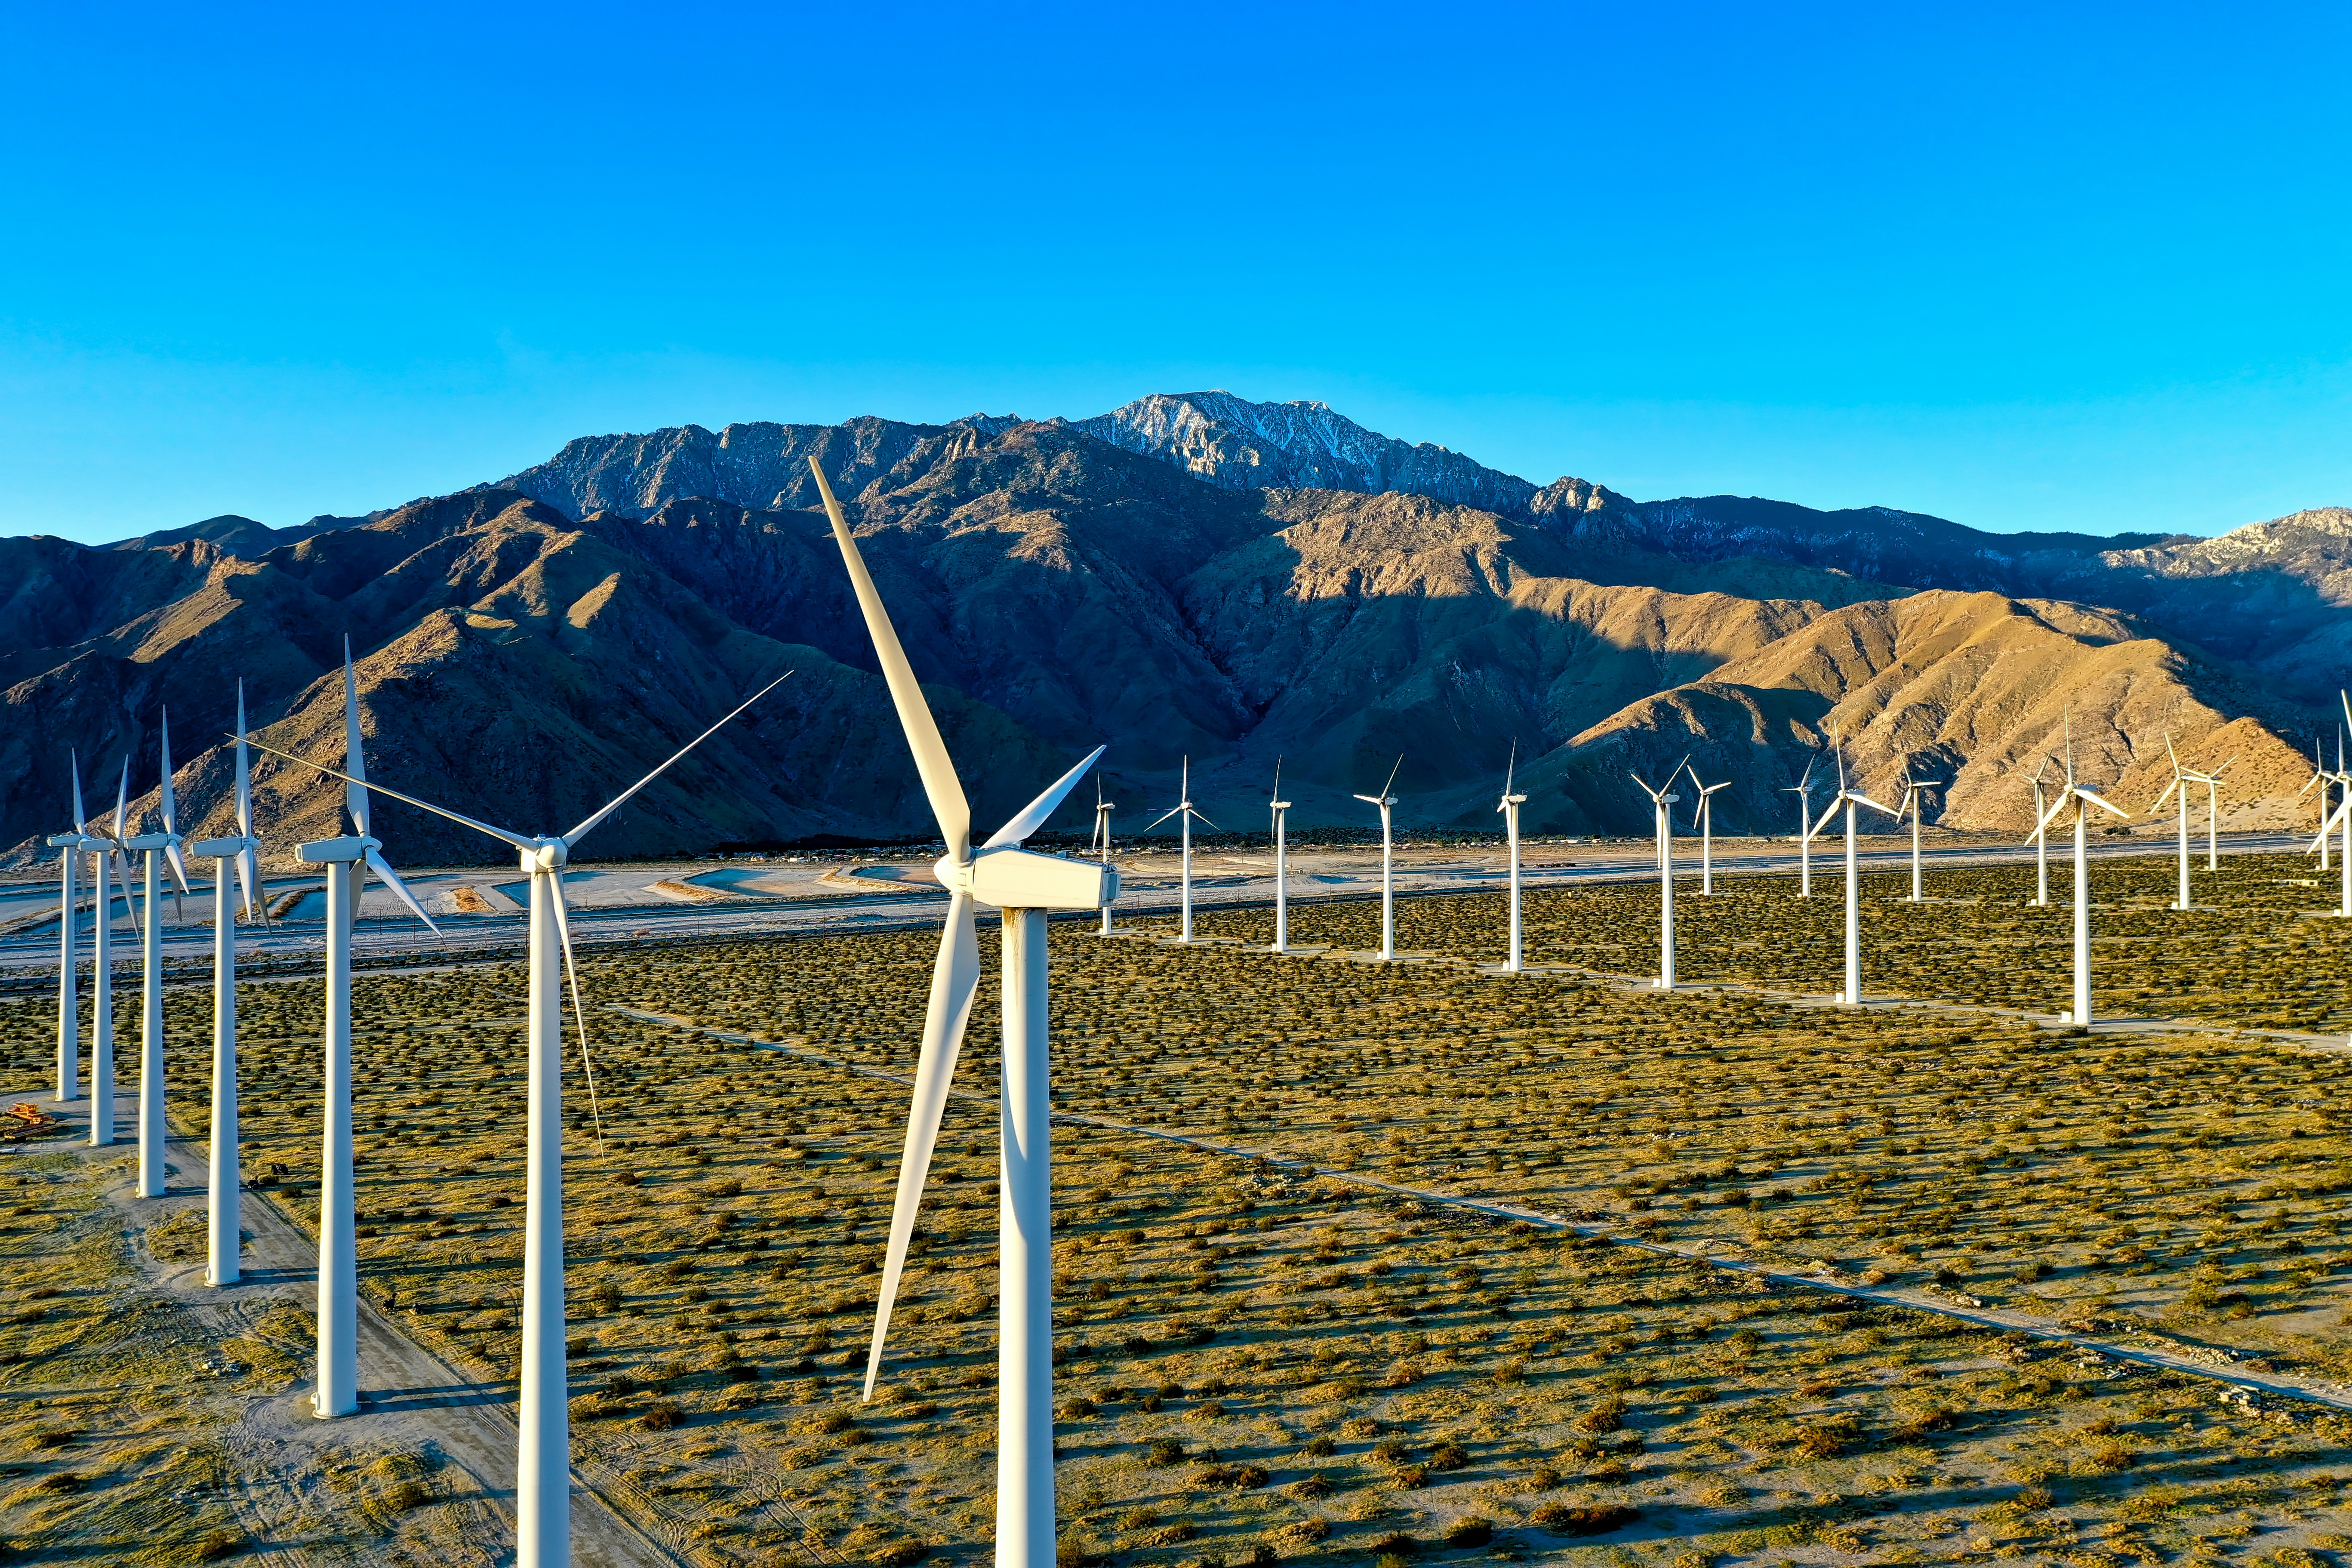 Wind Power Farm